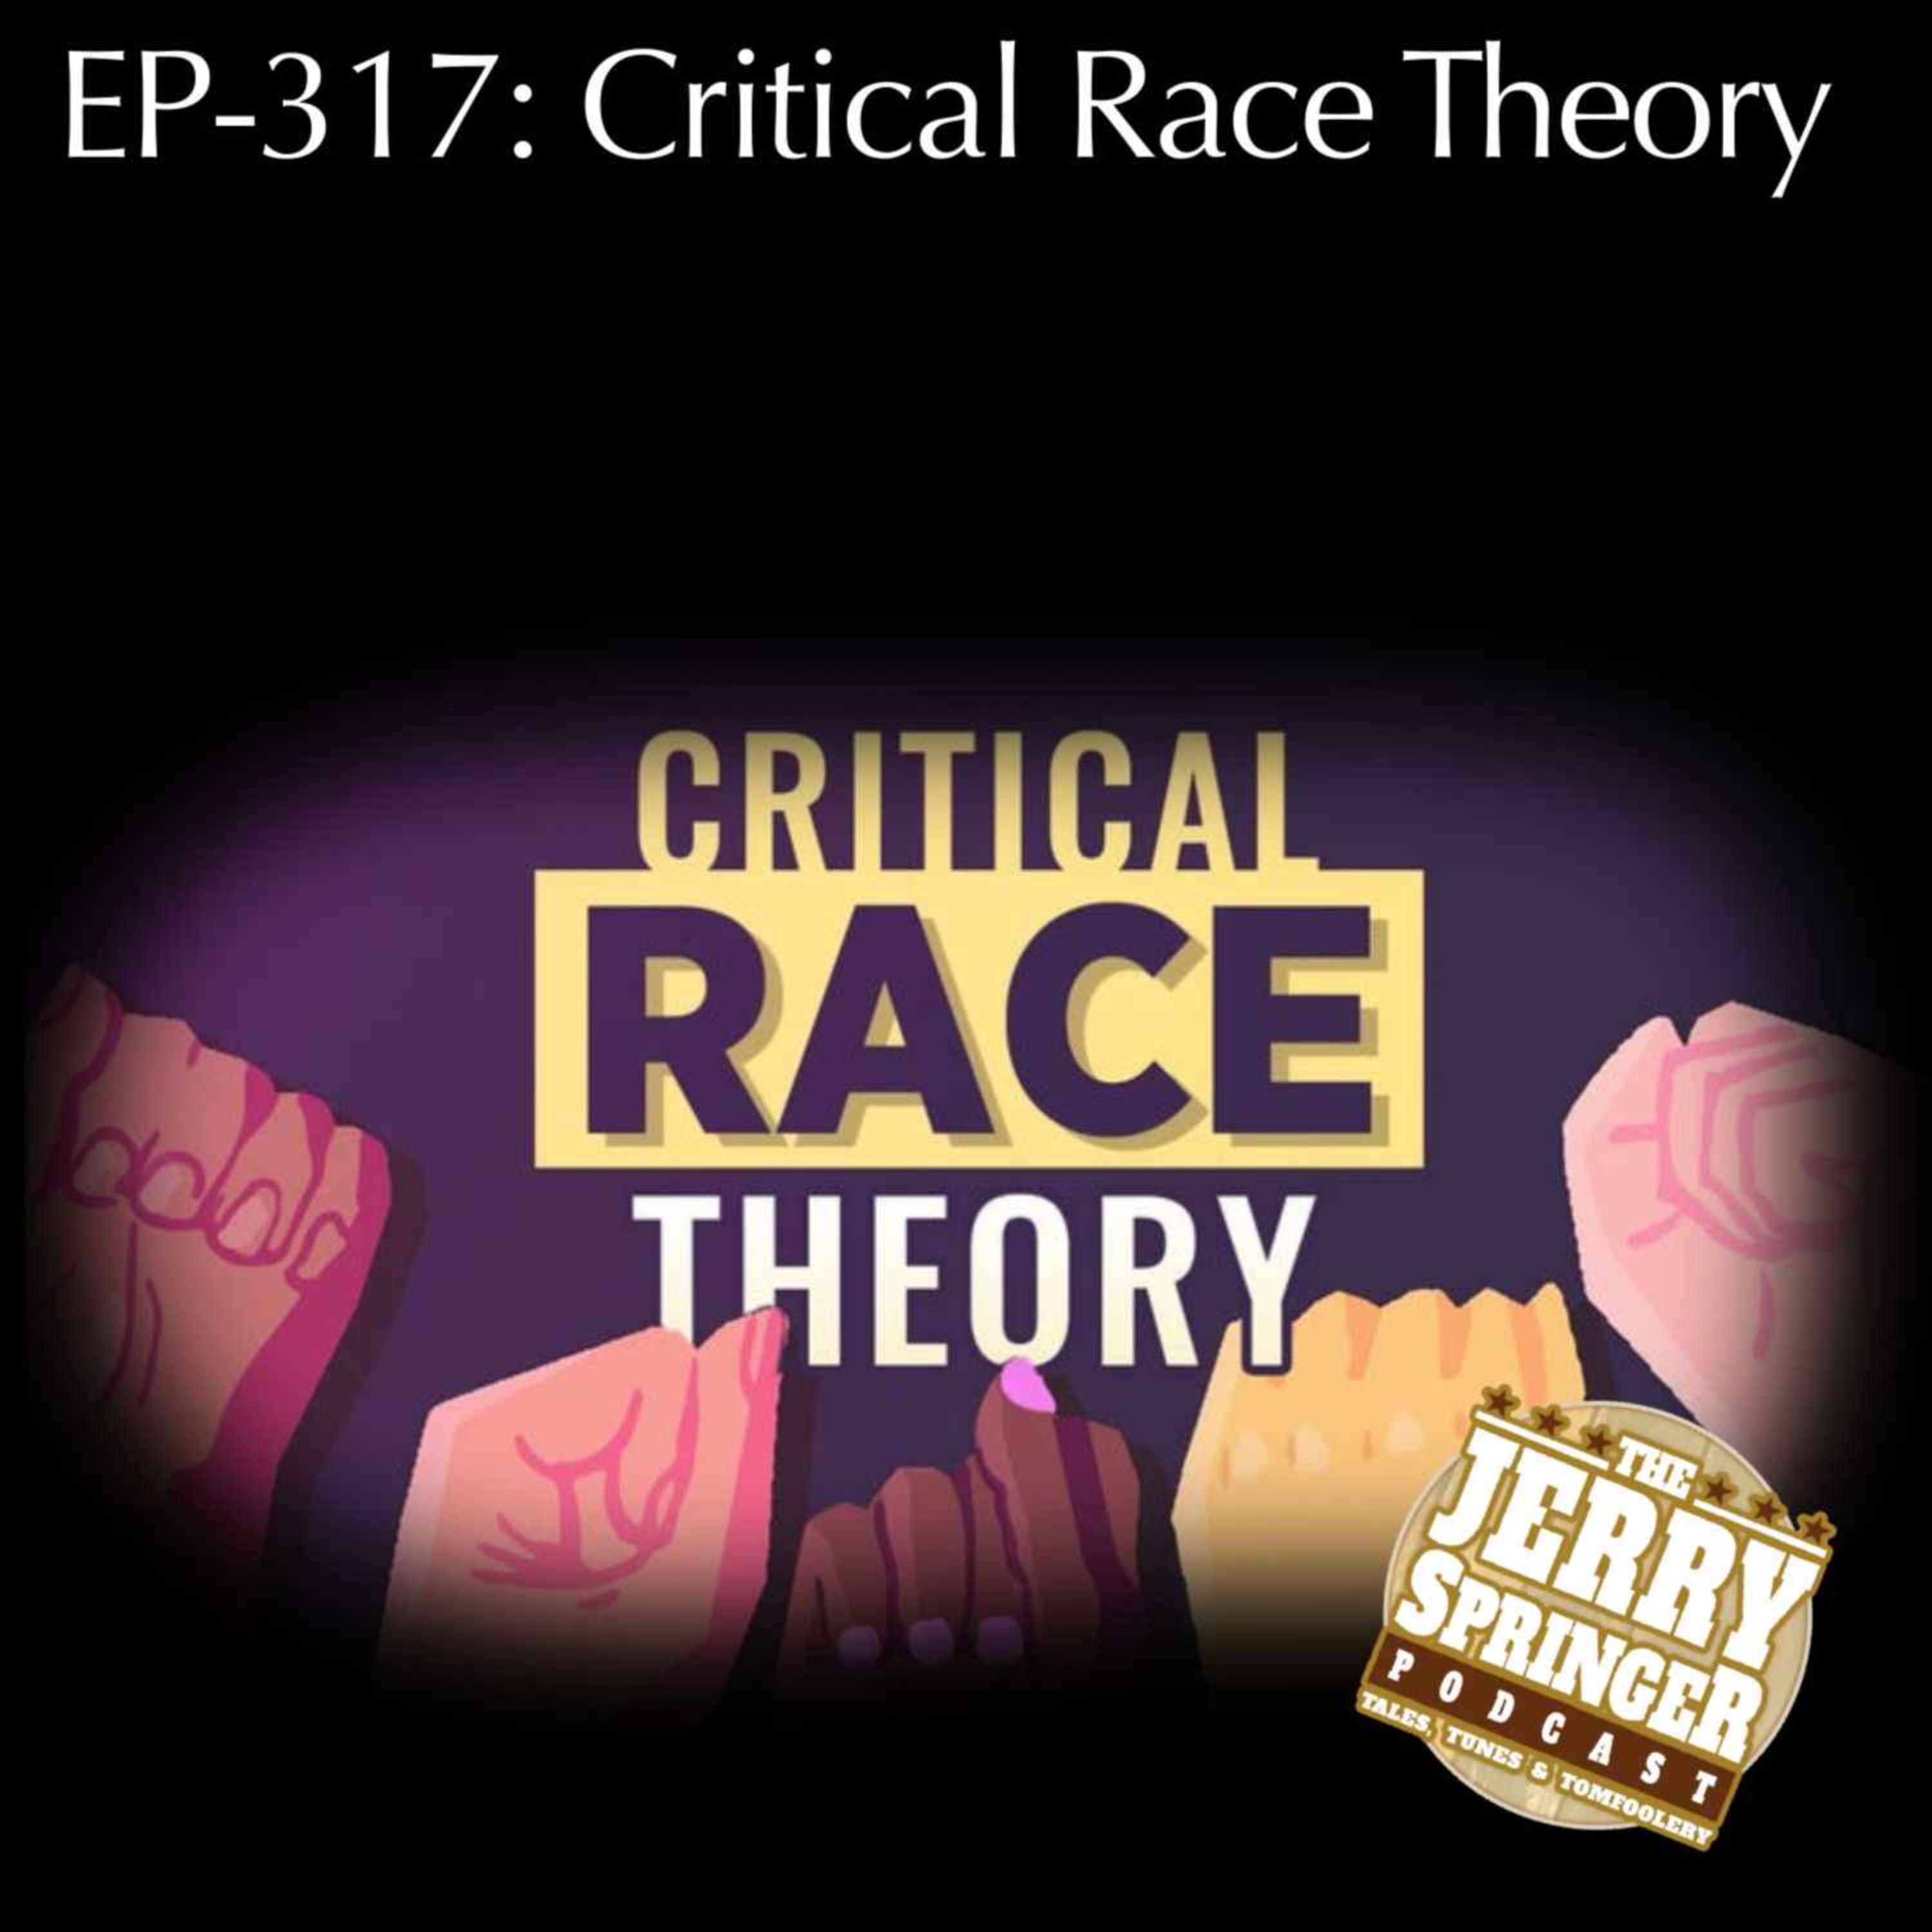 Critical Race Theory: EP-317